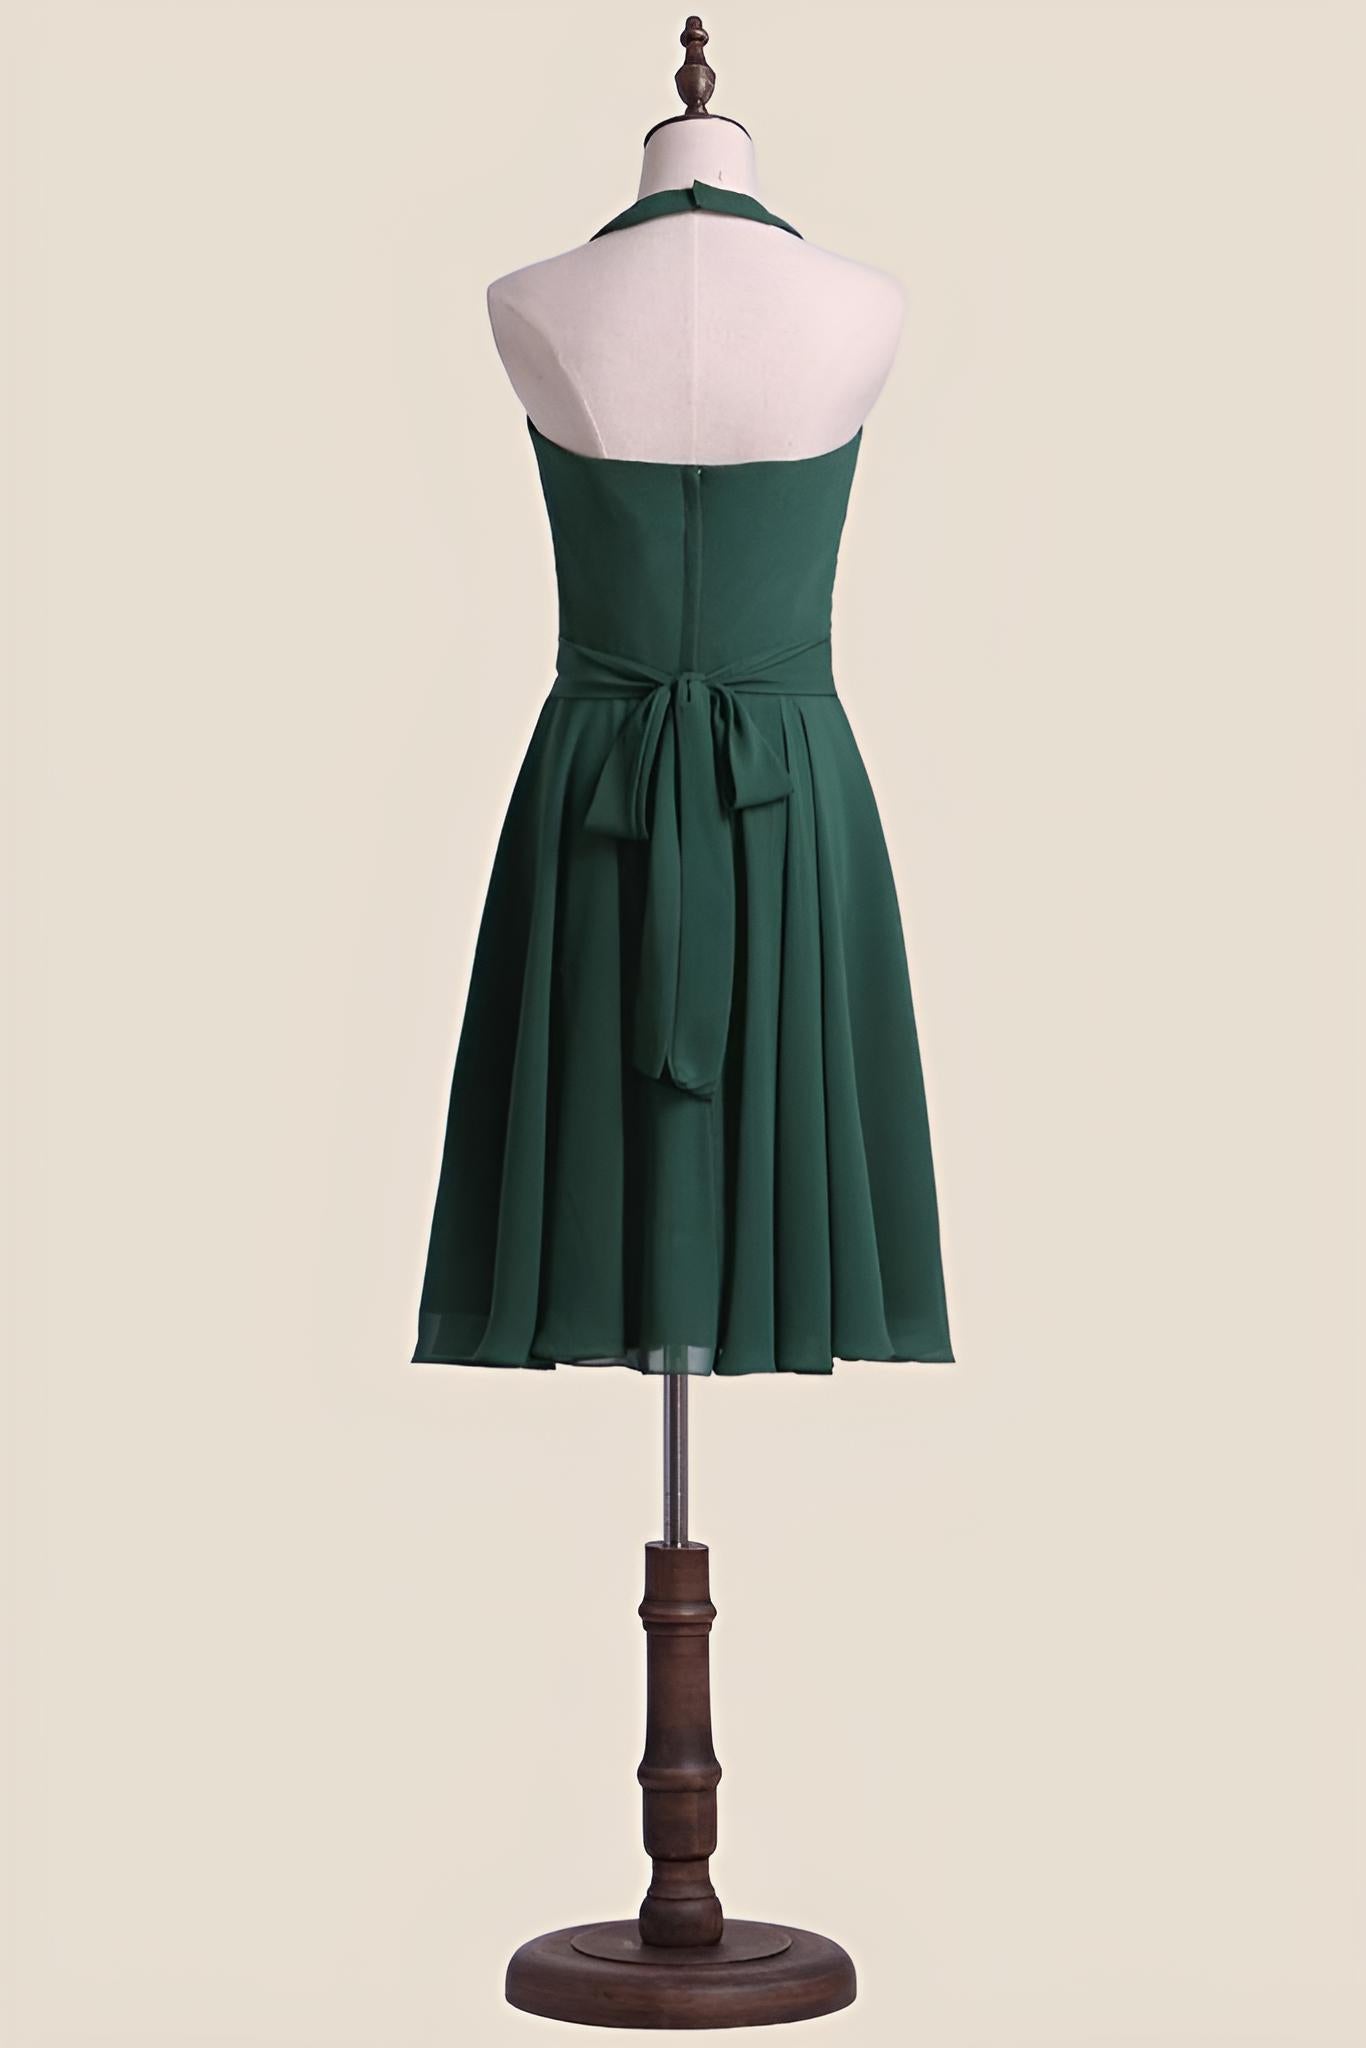 Halter Dark Green Chiffon Short A-line Party Dress